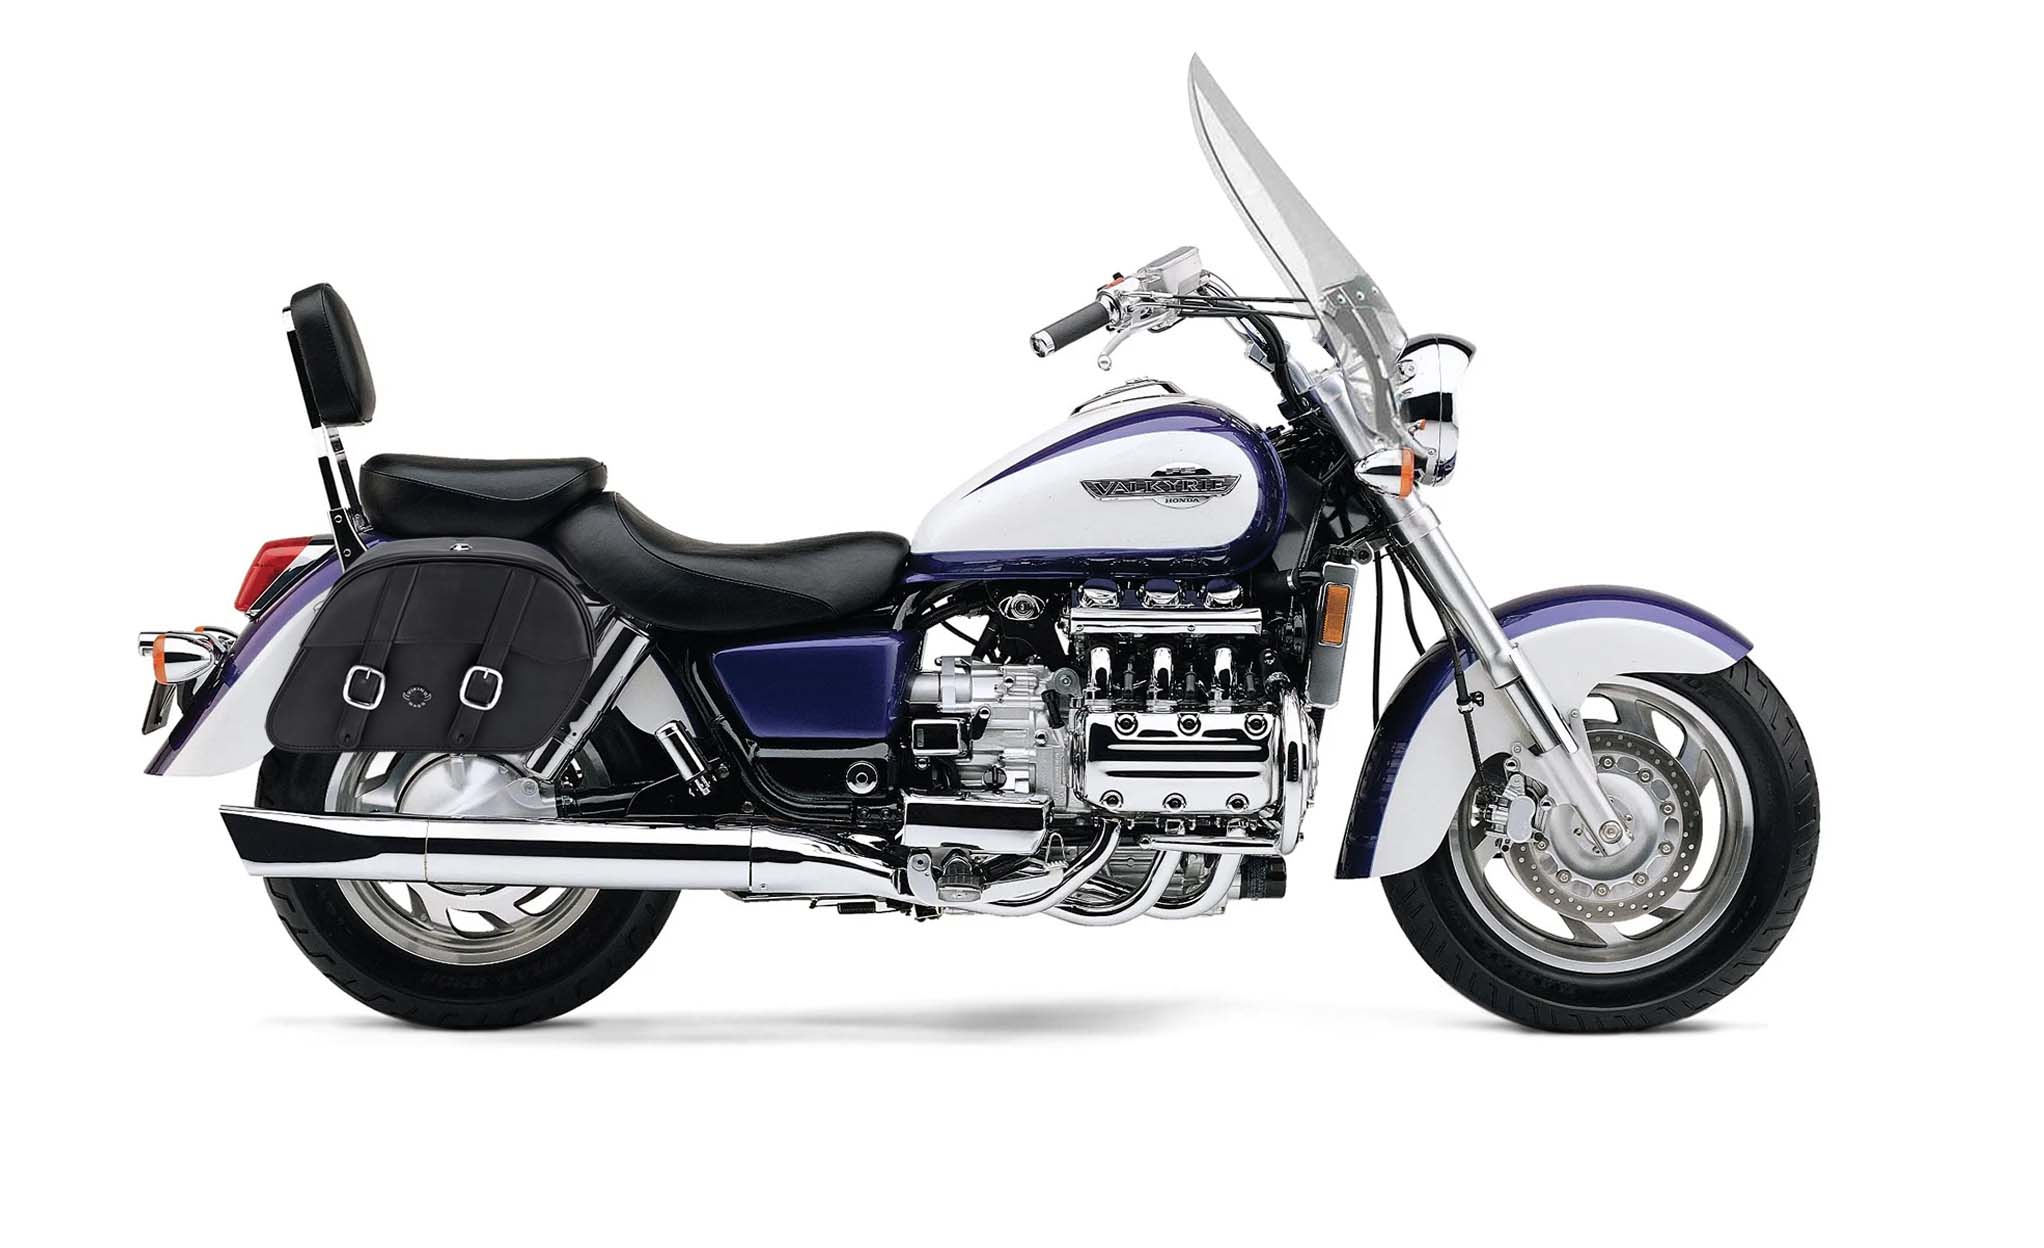 Viking Skarner Medium Lockable Honda Valkyrie 1500 Tourer Leather Motorcycle Saddlebags on Bike Photo @expand